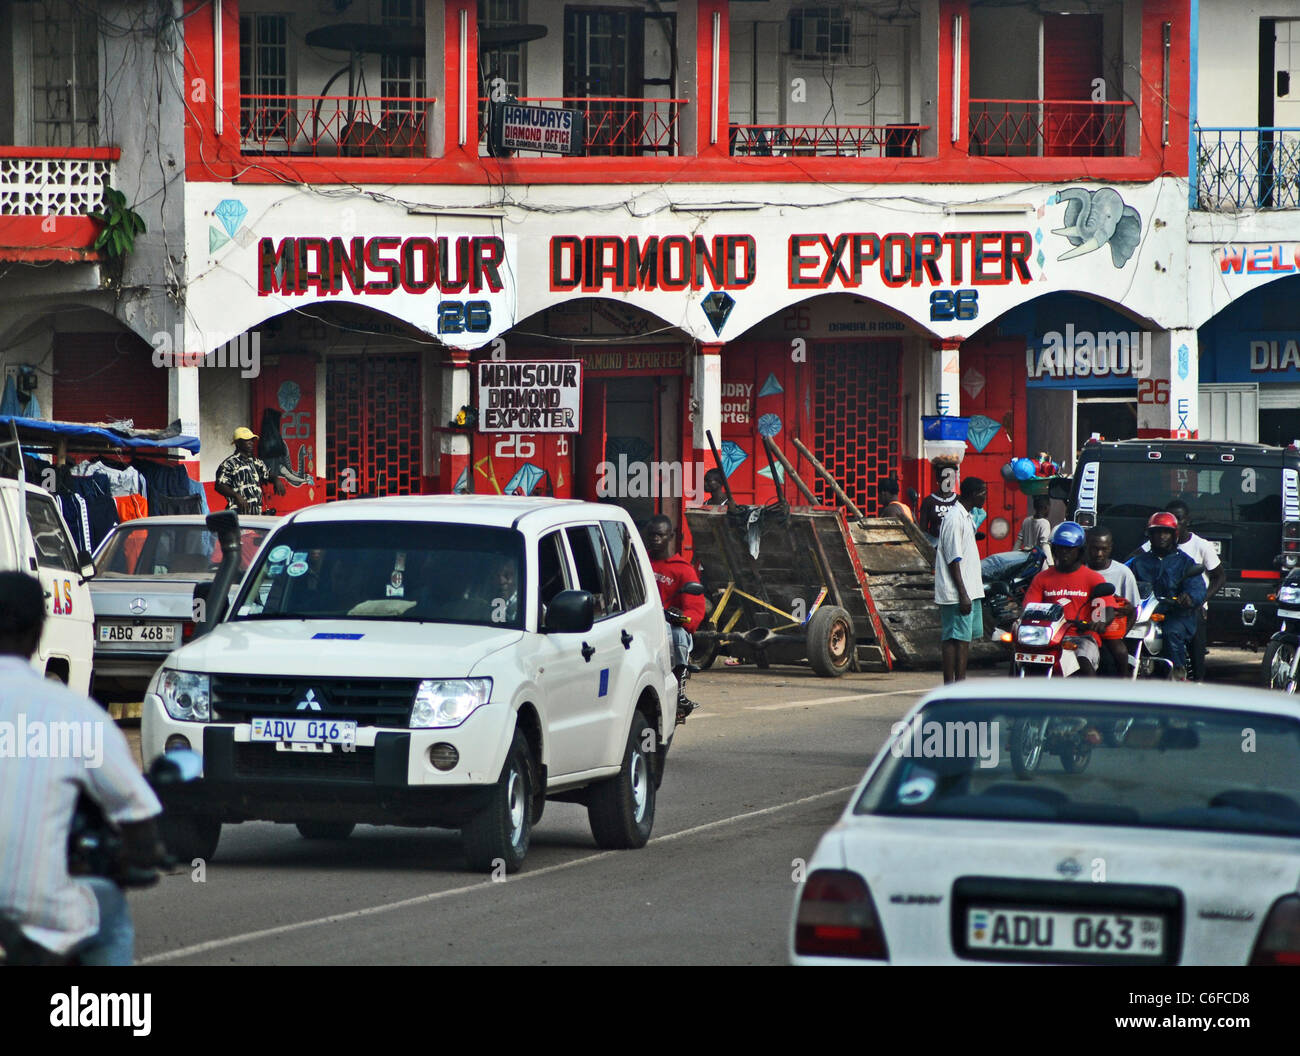 Diamond exporter in Bo town, Sierra Leone, West Africa Stock Photo